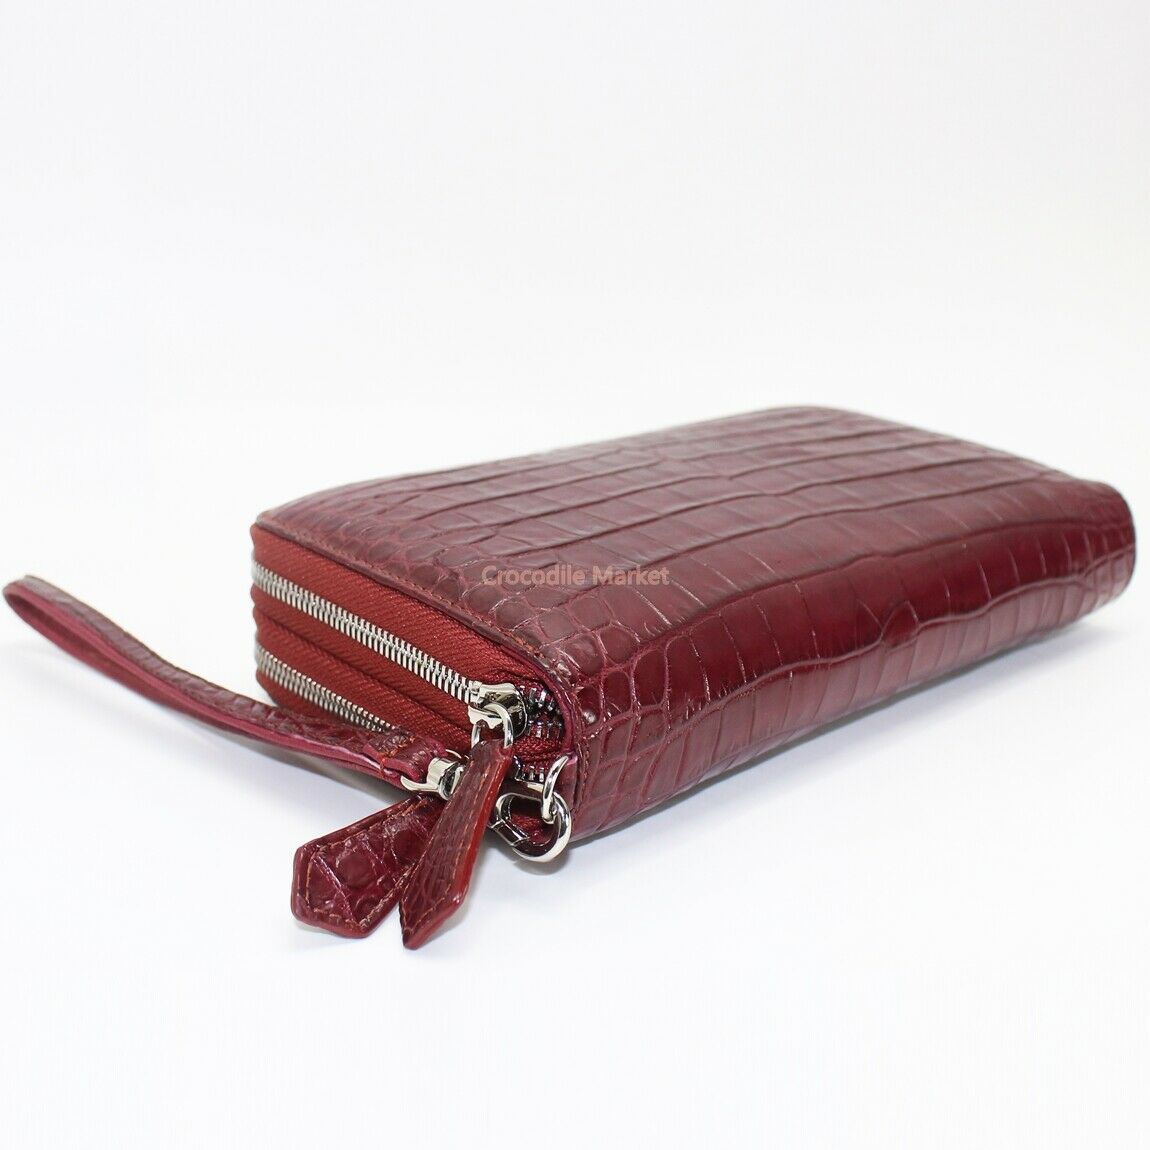 Genuine Leather Crocodile Skin Long Wallet 2 Zip-Around Clutch Handbag, Burgundy